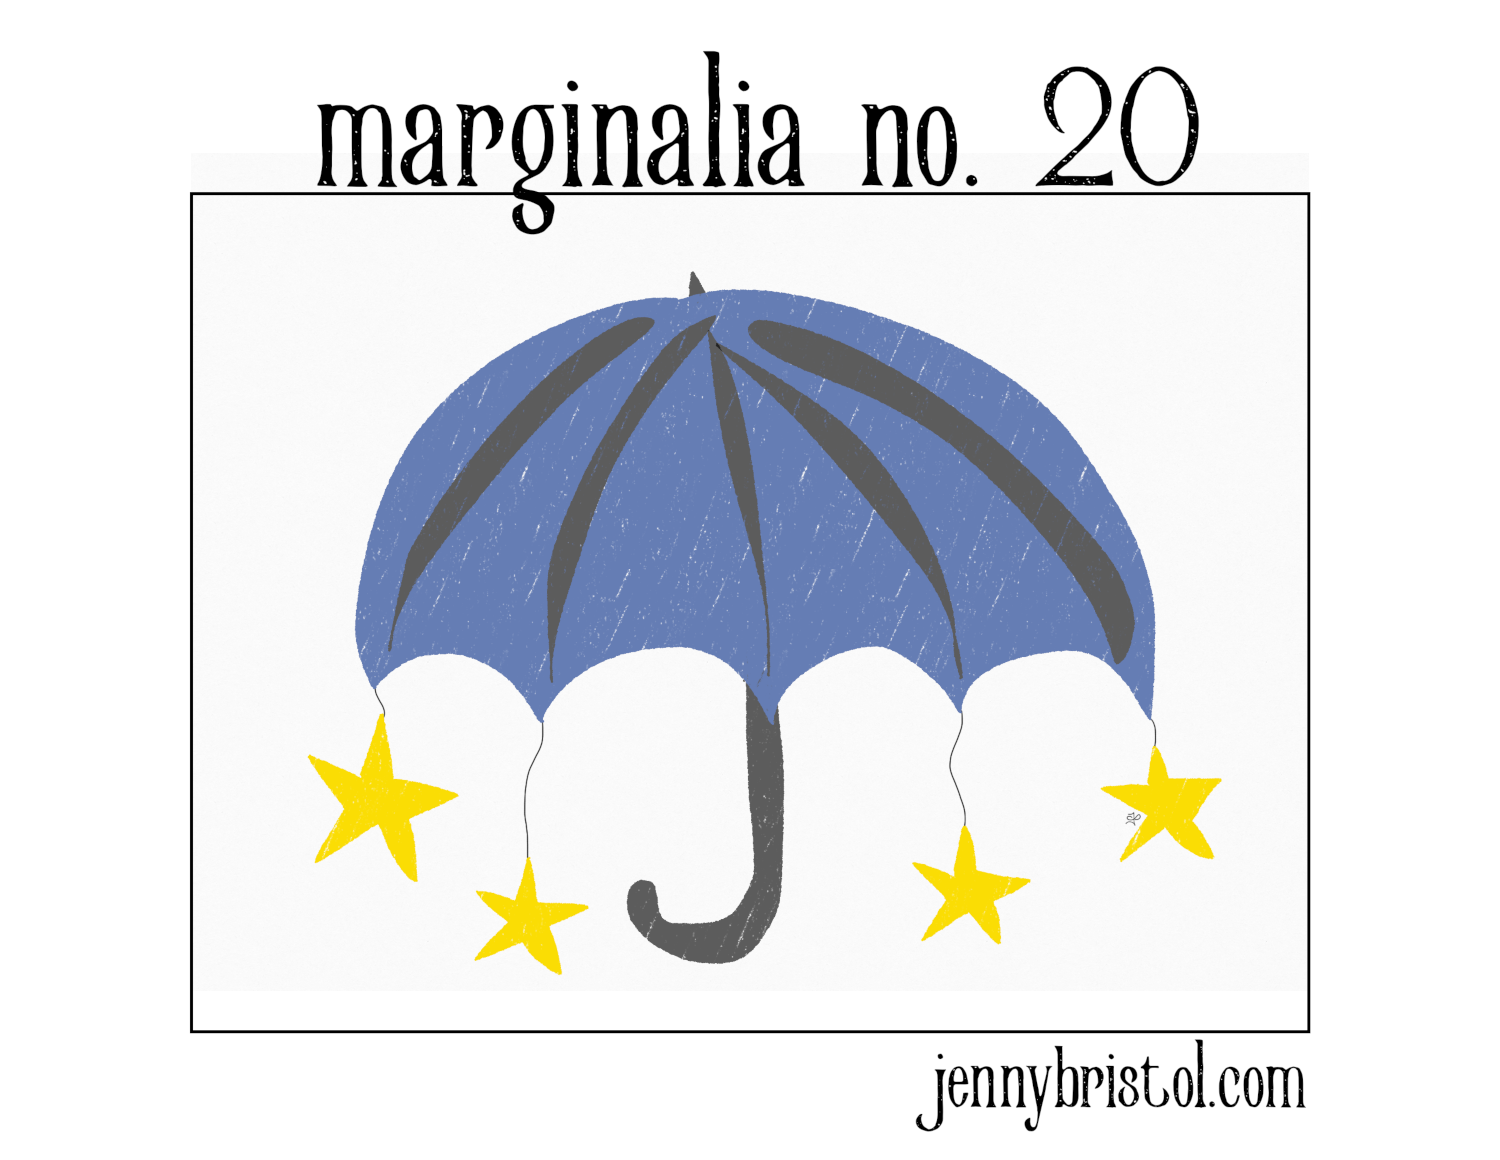 Marginalia no. 20 to post